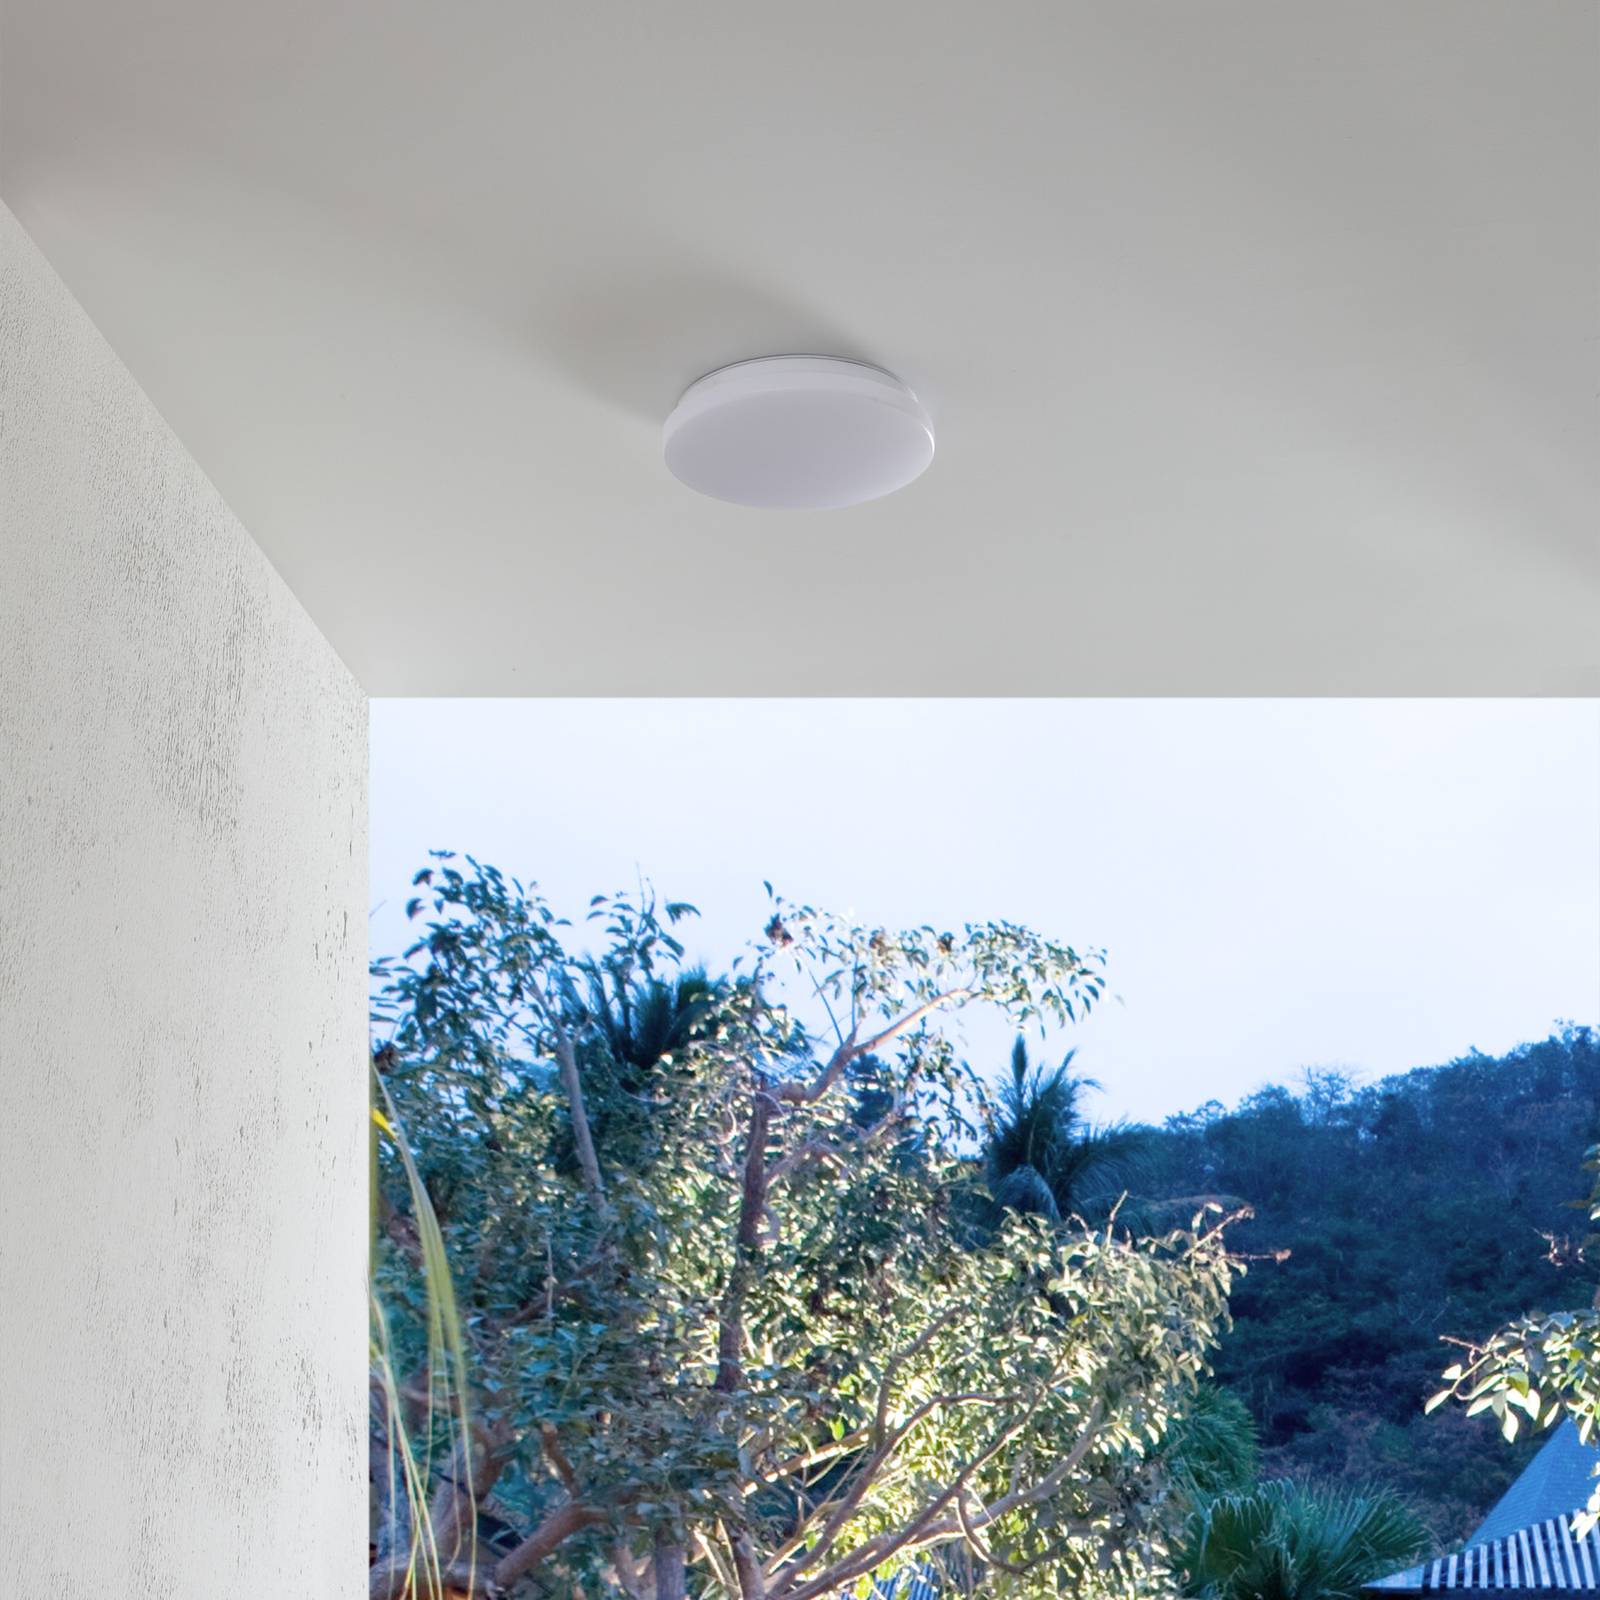 Lindby Doki LED vonkajšie stropné svietidlo, 26 cm, biele, plast